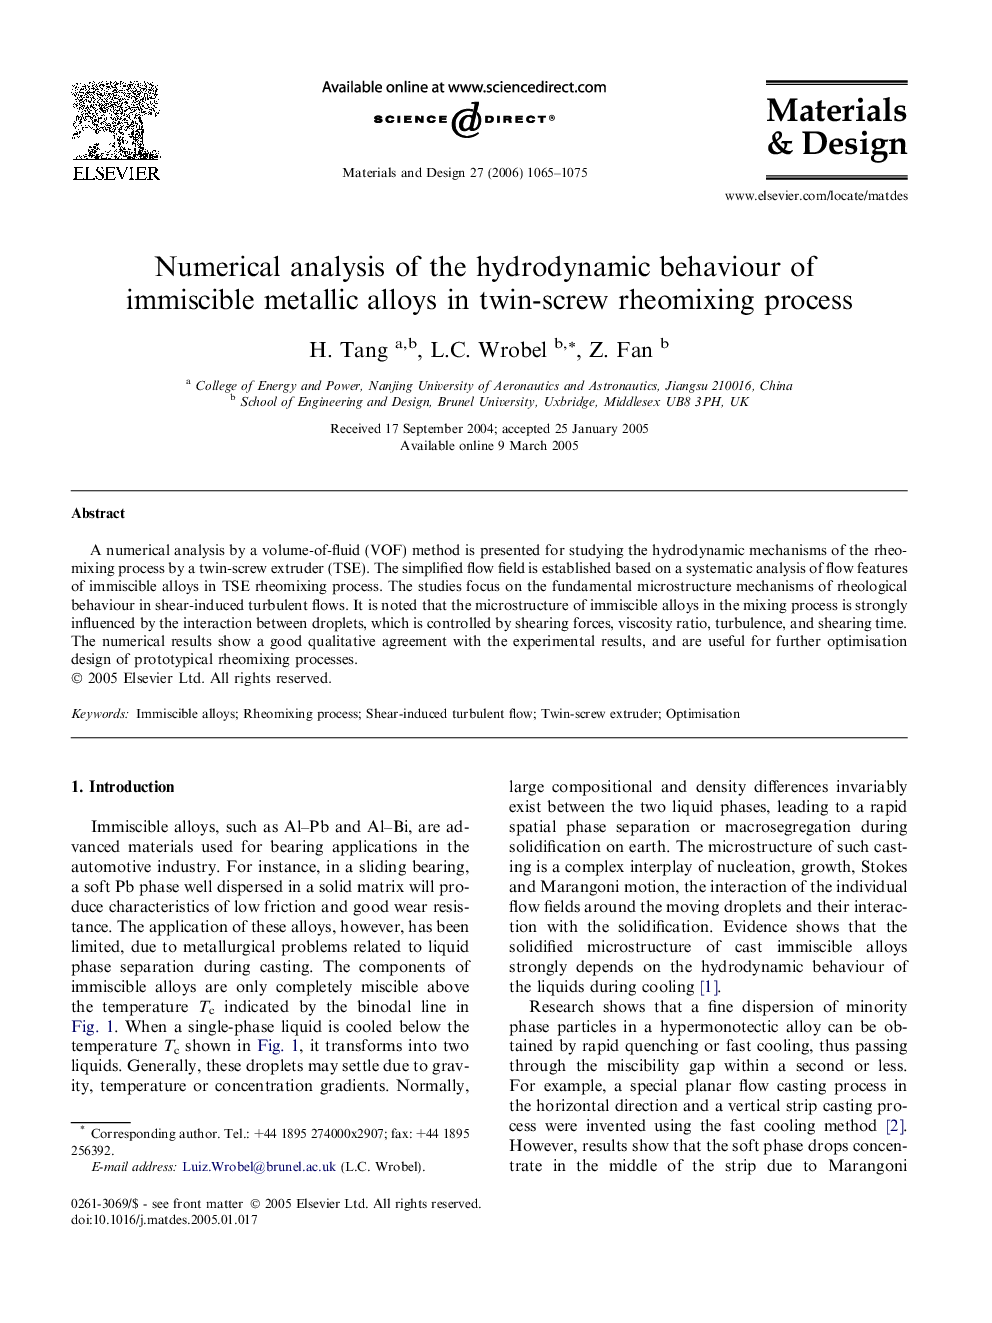 Numerical analysis of the hydrodynamic behaviour of immiscible metallic alloys in twin-screw rheomixing process